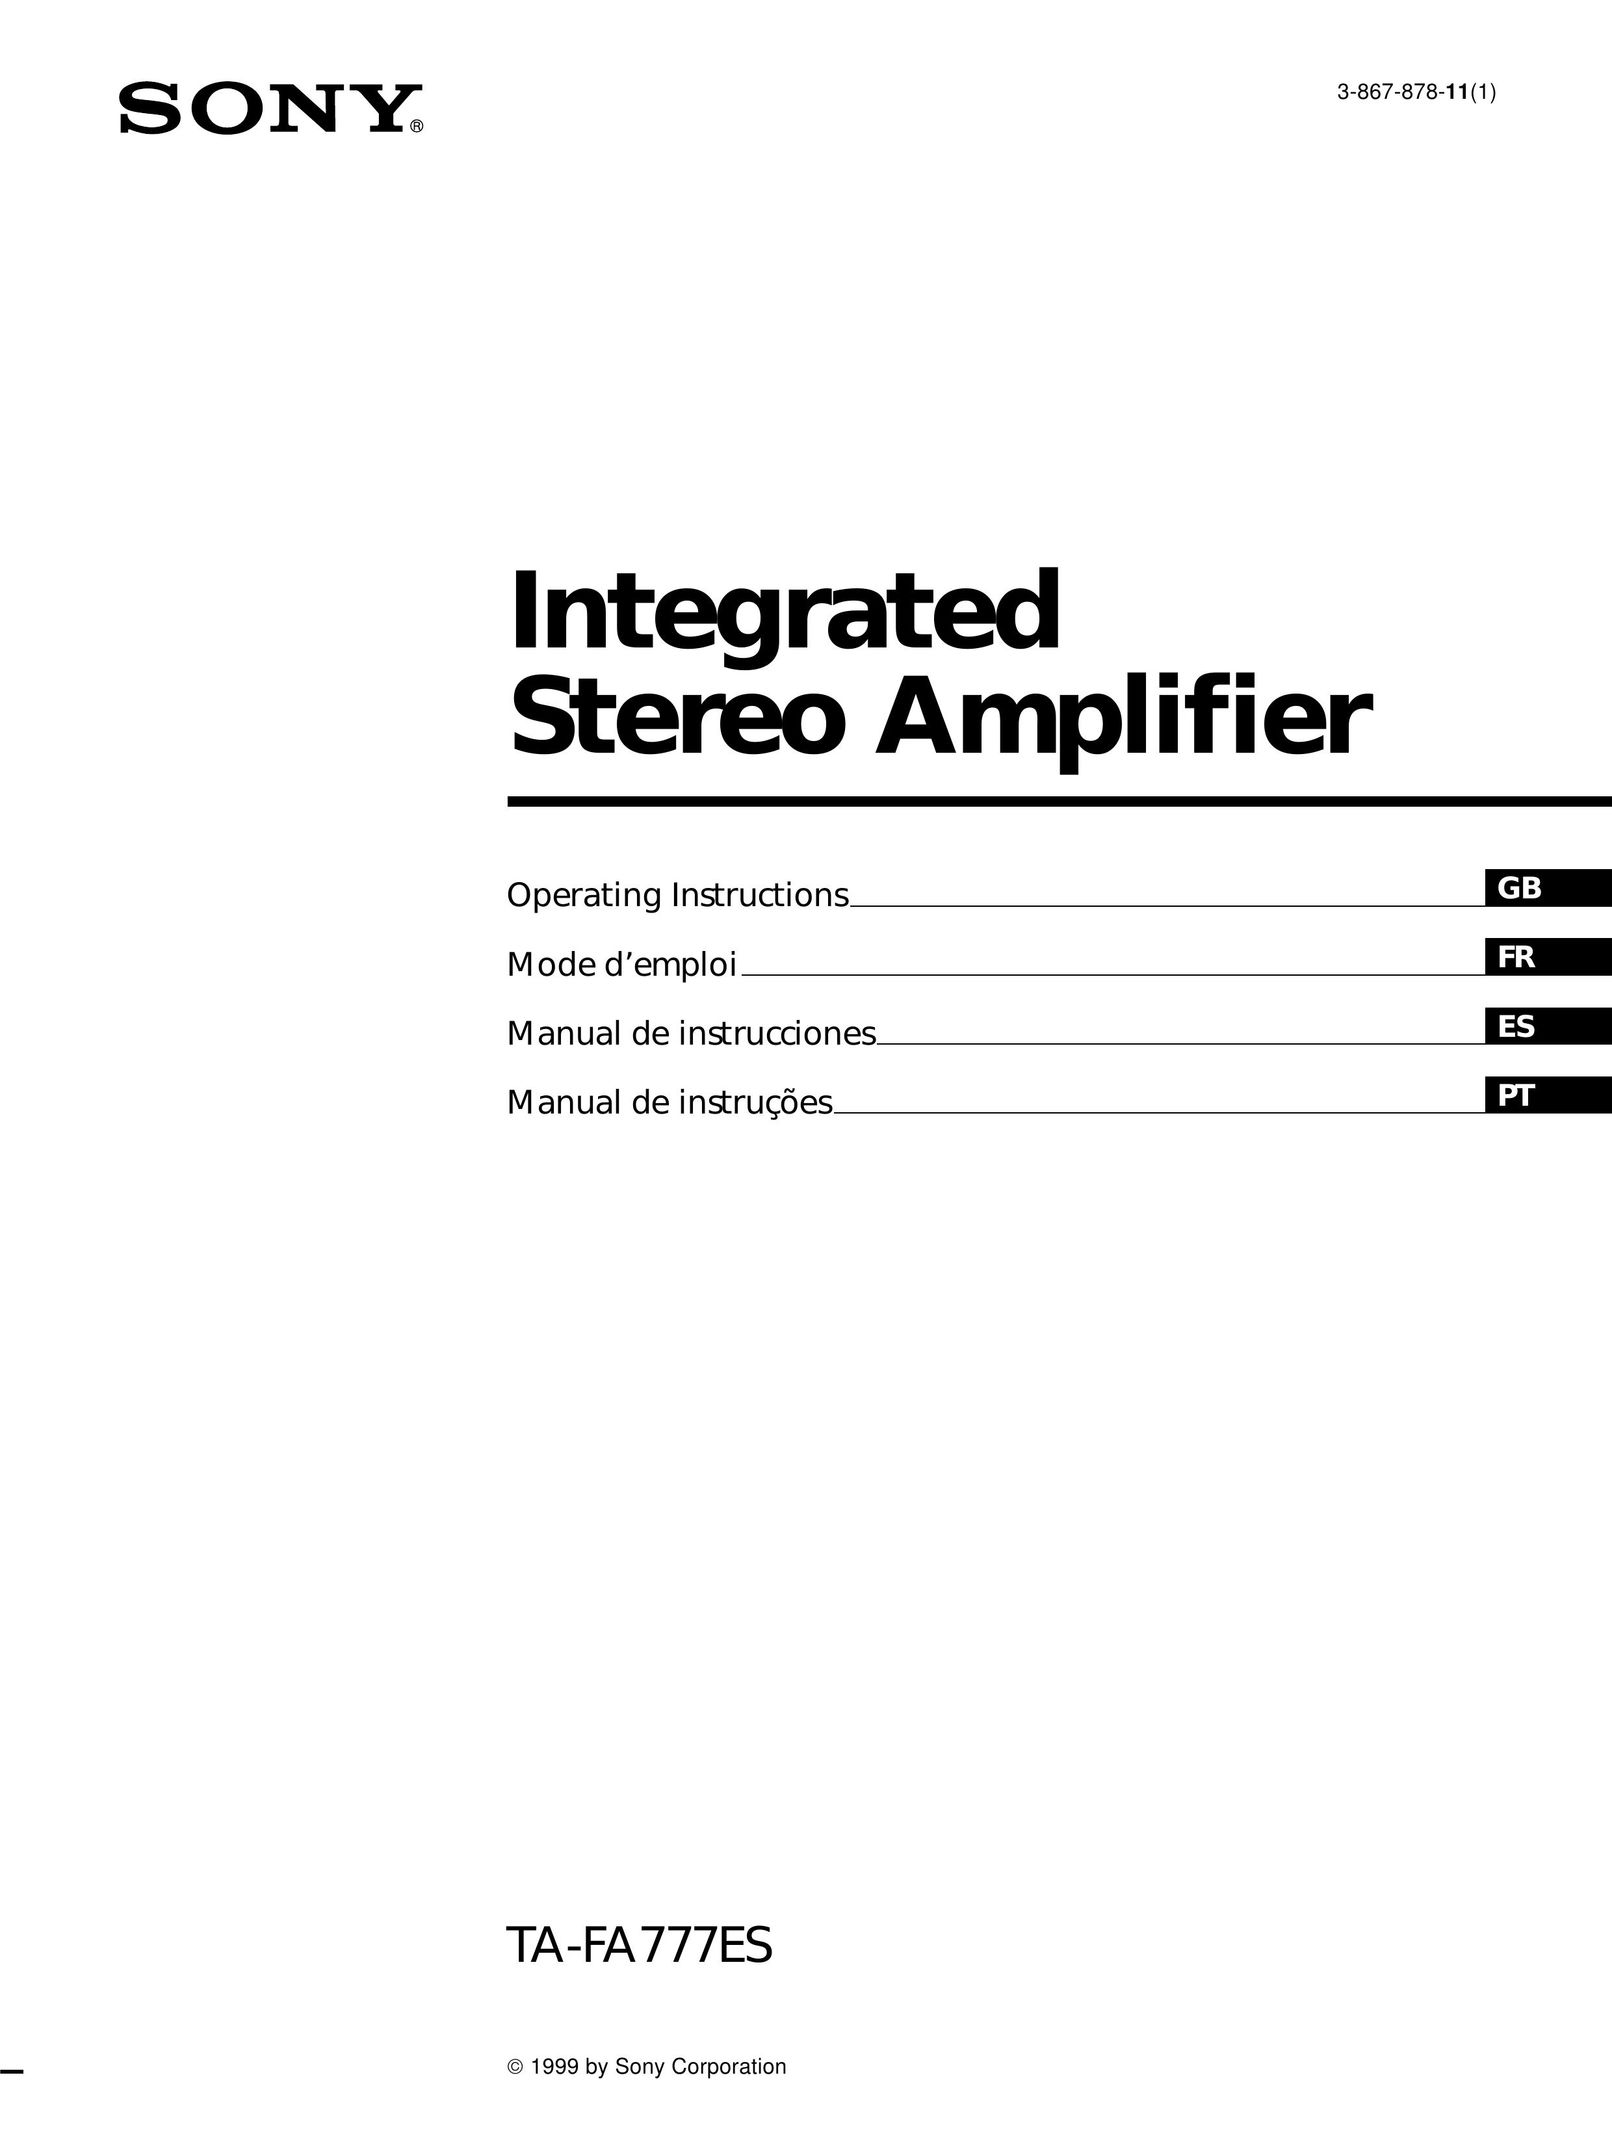 Sony TA-FA777ES Stereo Amplifier User Manual